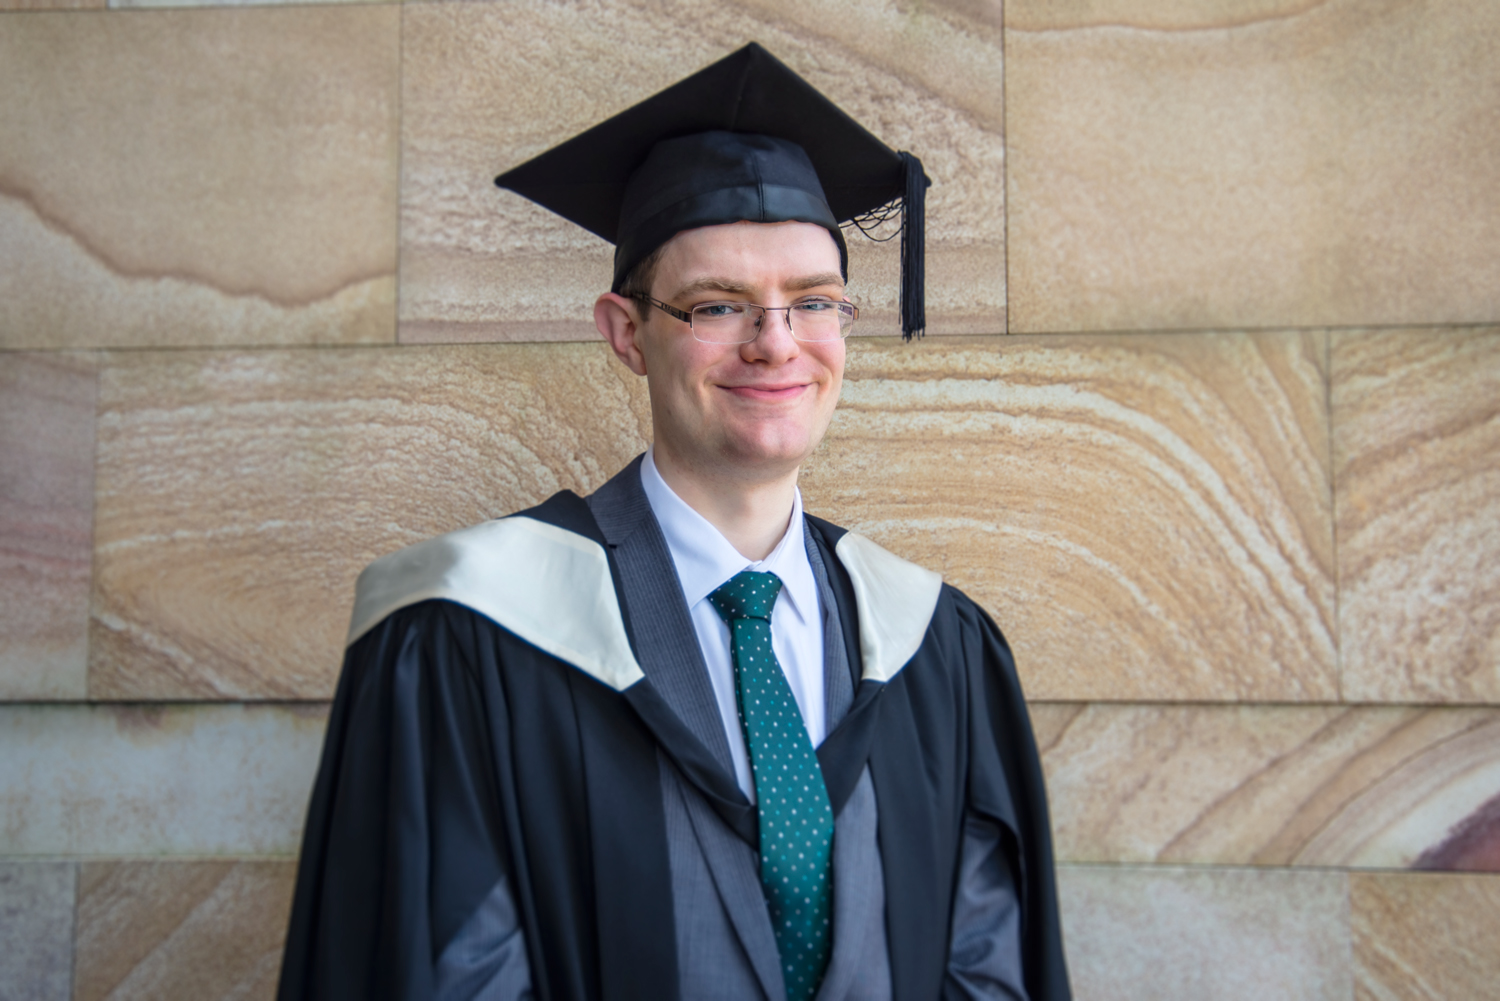 Christopher Heard, Bachelor of Economics (Honours) graduate and UQ medallist